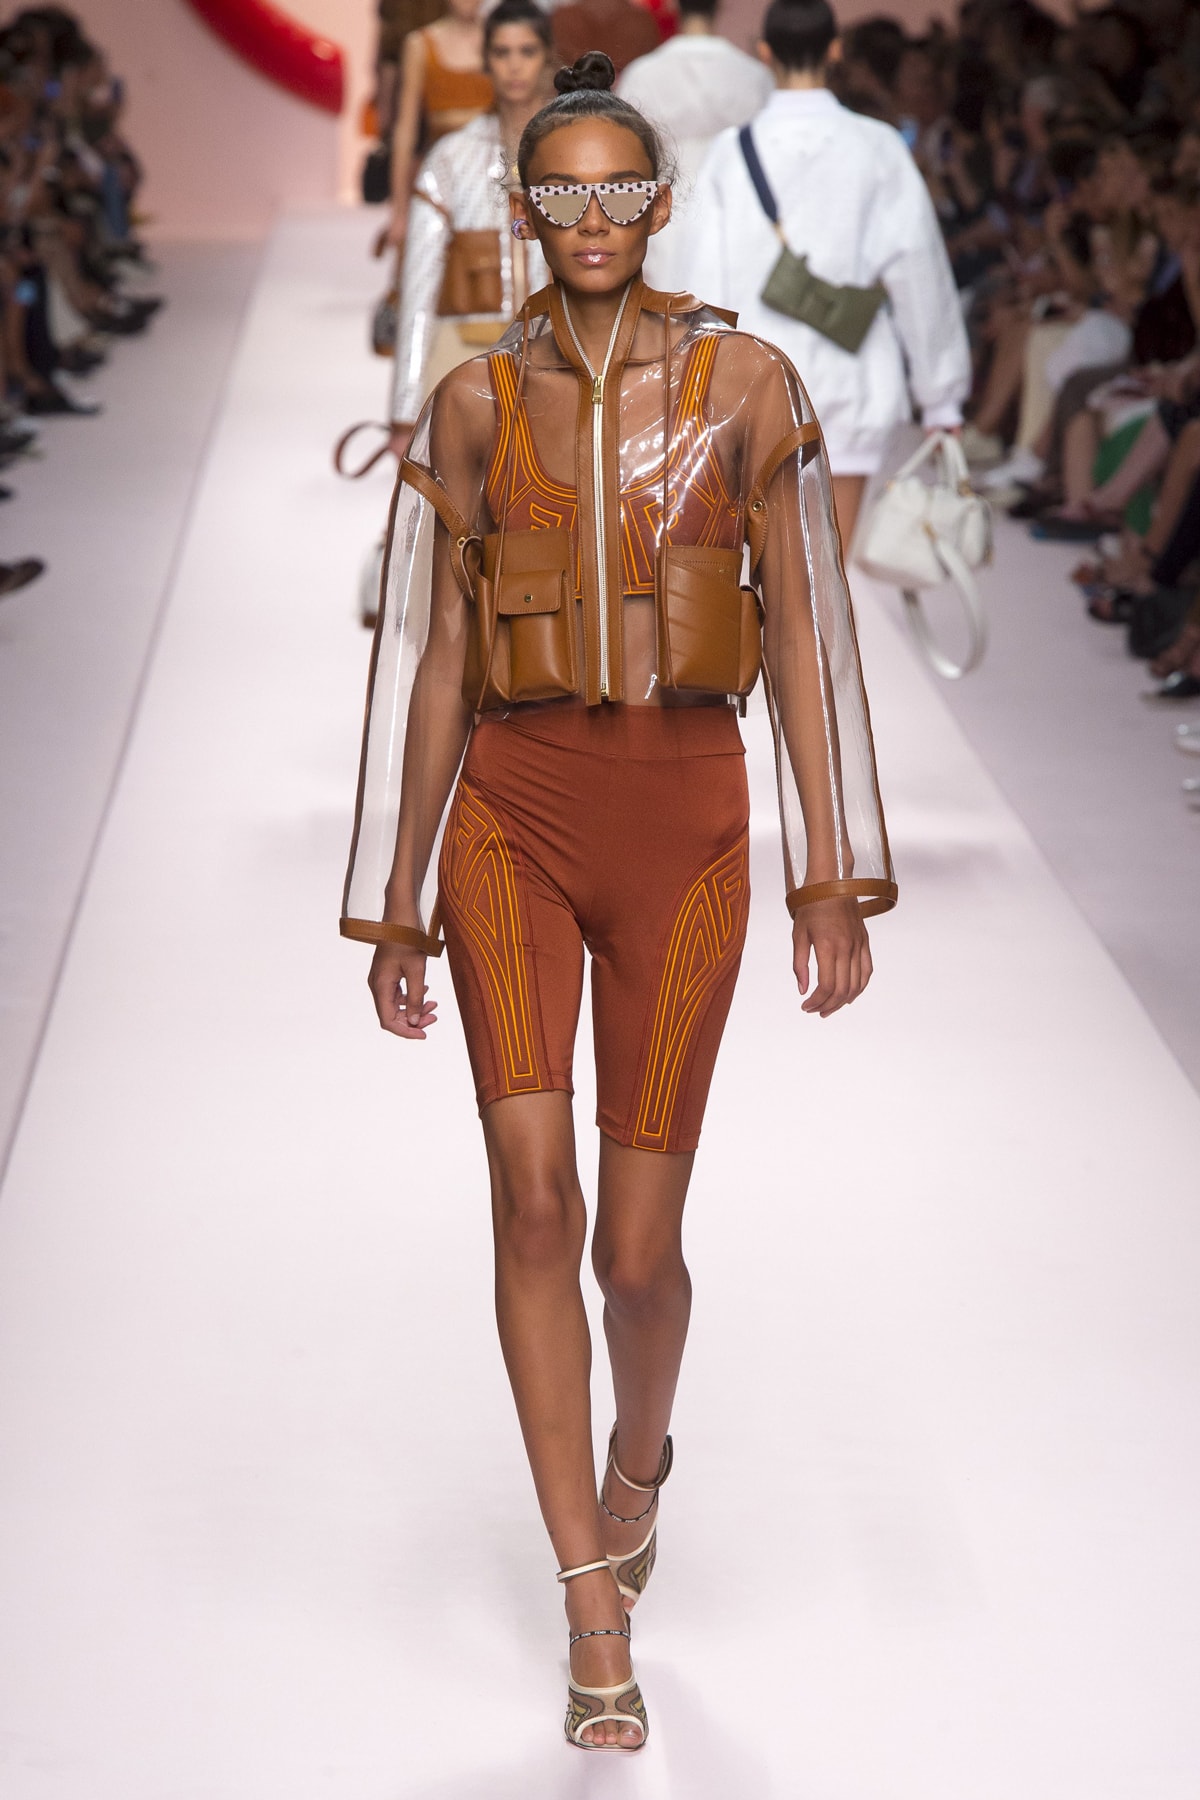 Fendi Karl Lagerfeld Spring Summer 2019 Milan Fashion Week Show Collection Binx Walton Jacket Clear Biker Shorts Orange